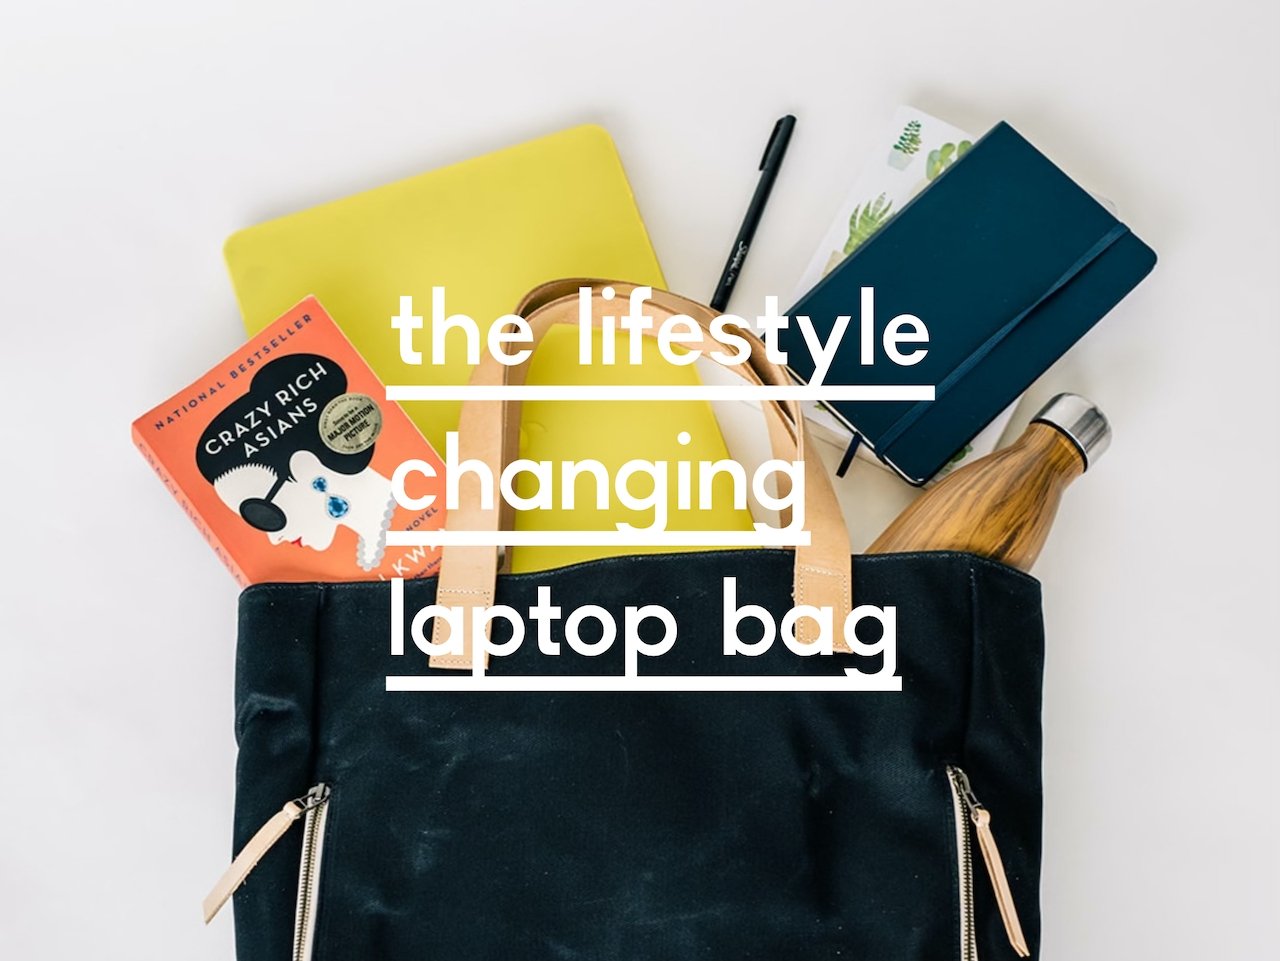 The lifestyle changing laptop bag - notebooks & honey